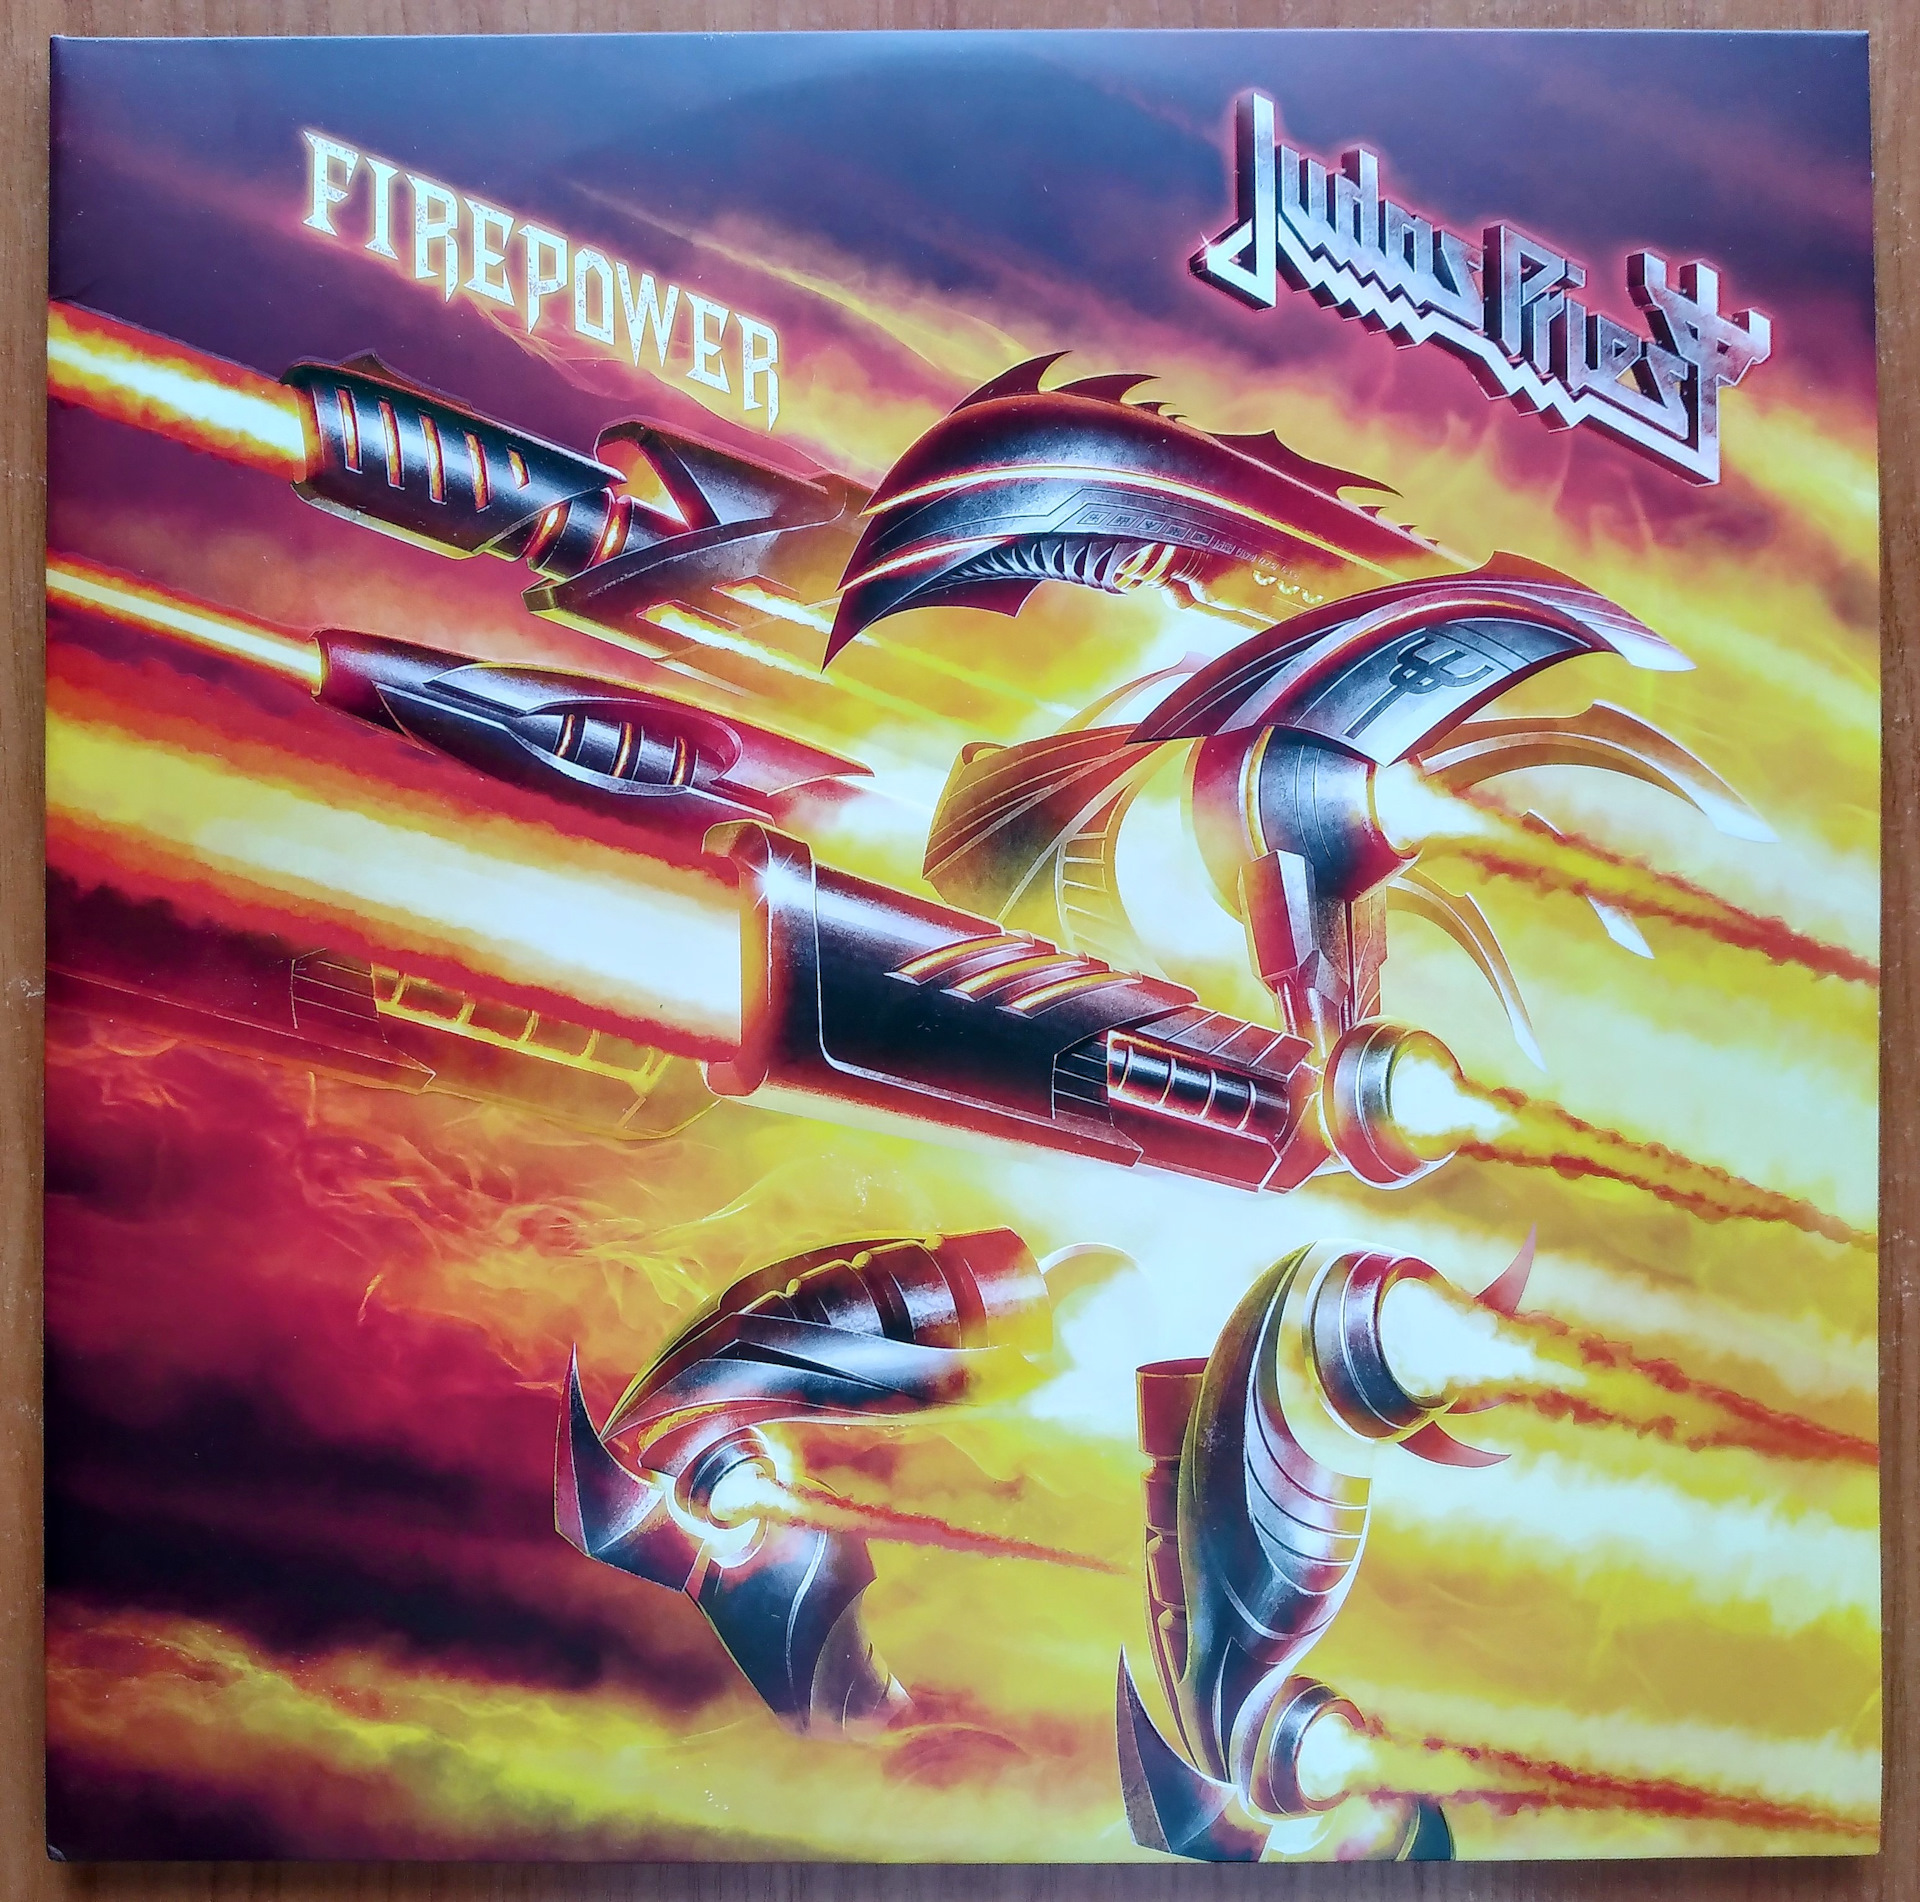 Judas priest invincible shield mp3. Judas Priest "Firepower (LP)". Джудас прист винил. Judas Priest Firepower 2018. Judas Priest винил.